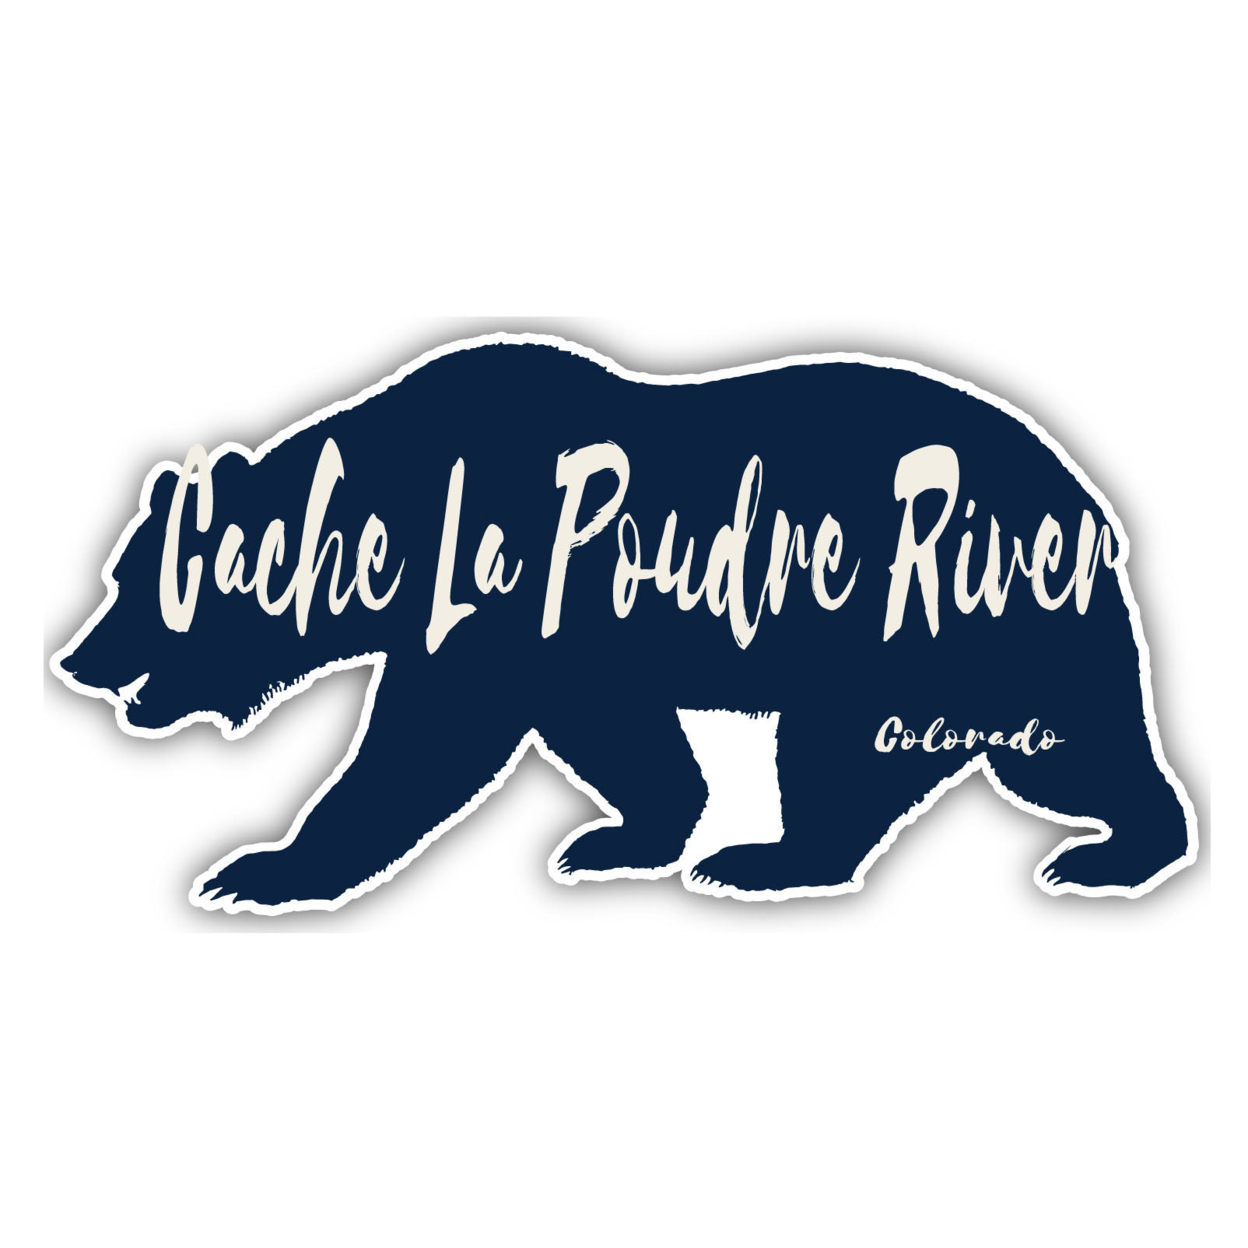 Cache La Poudre River Colorado Souvenir Decorative Stickers (Choose Theme And Size) - Single Unit, 4-Inch, Tent